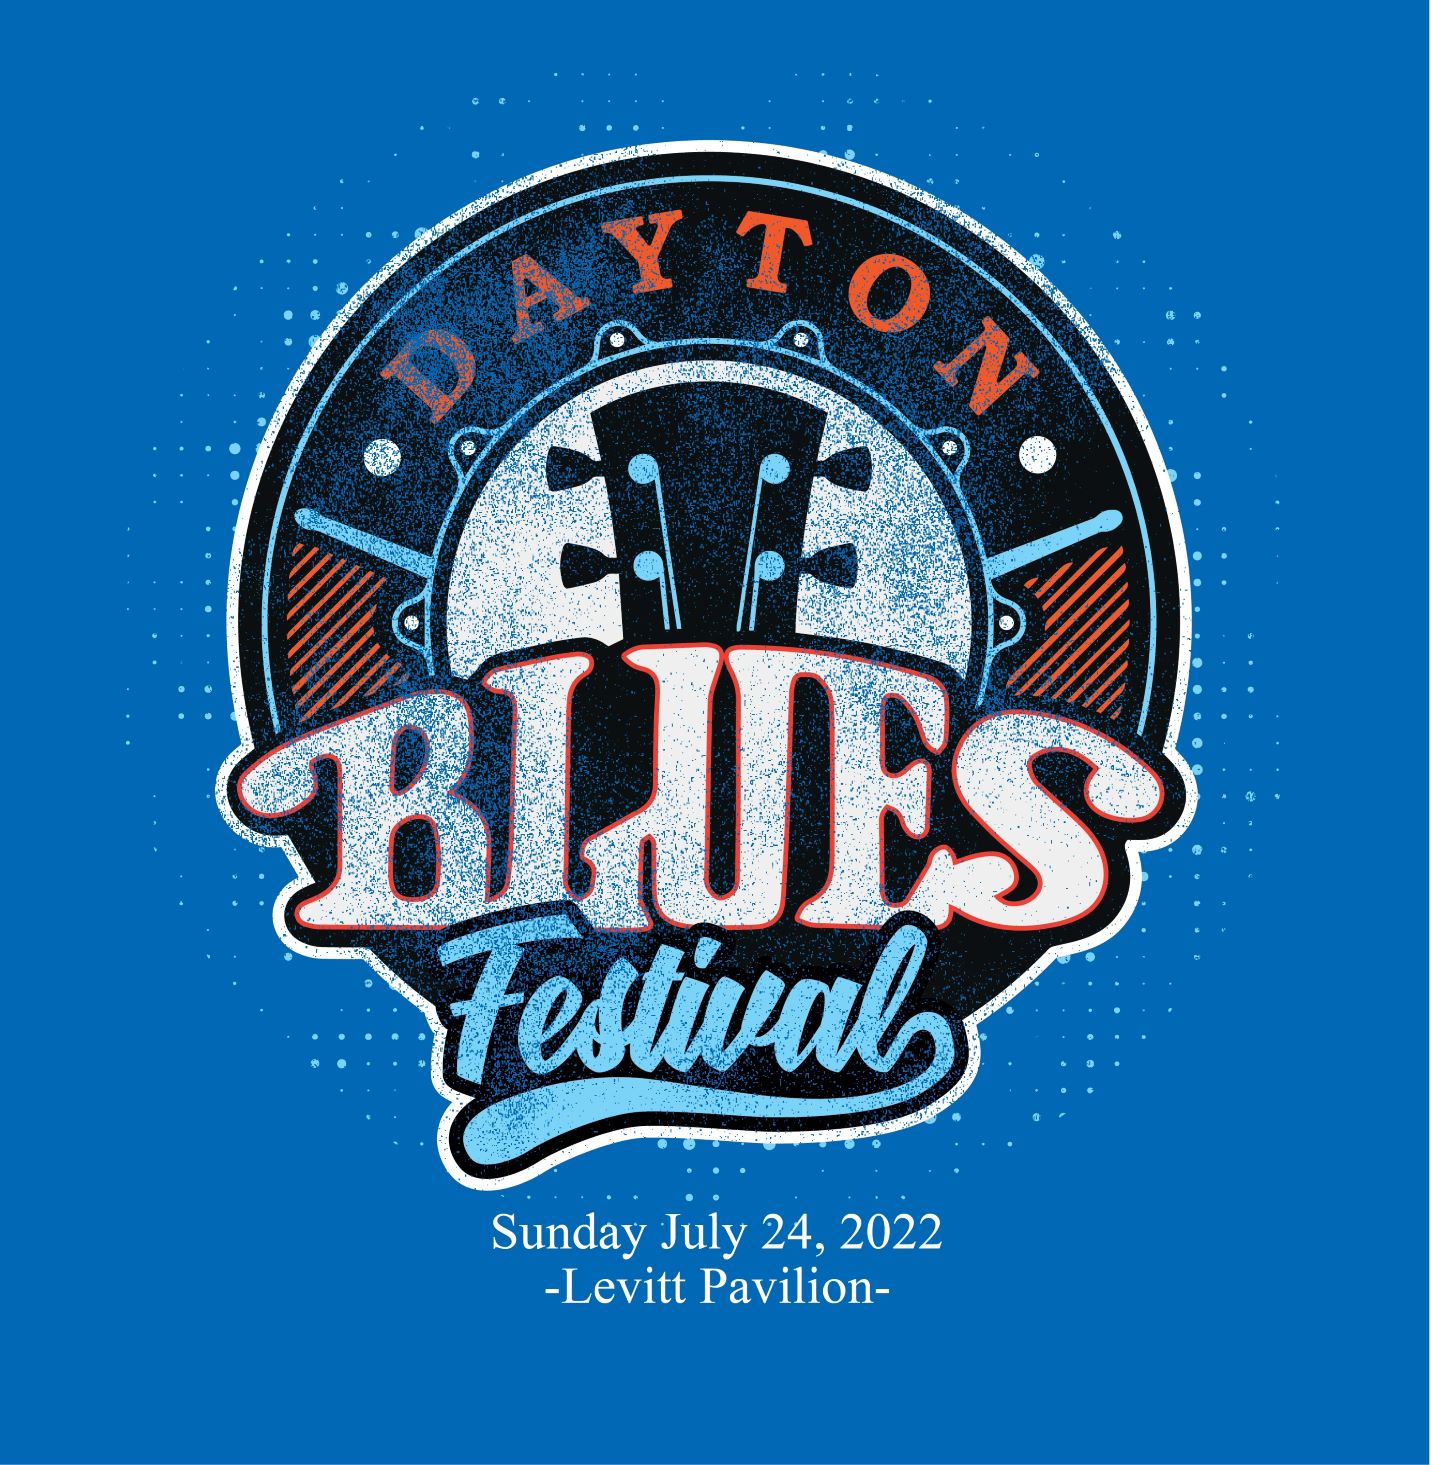 City of dayton blues festival